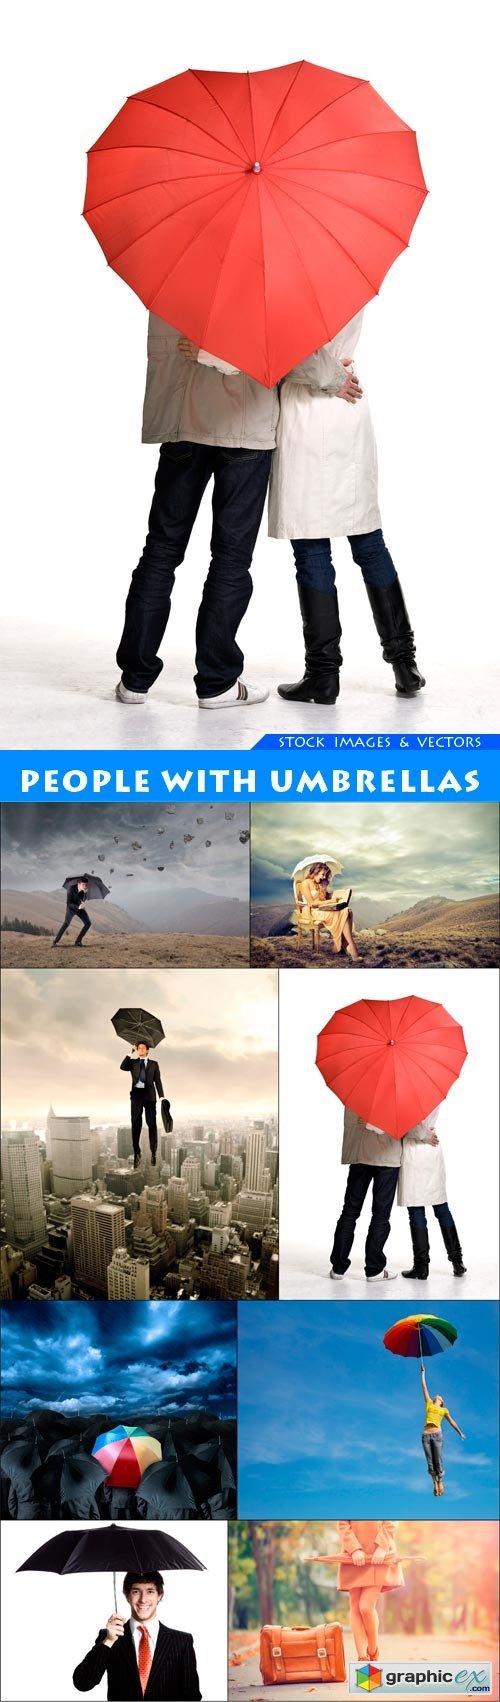 People with umbrellas 8X JPEG